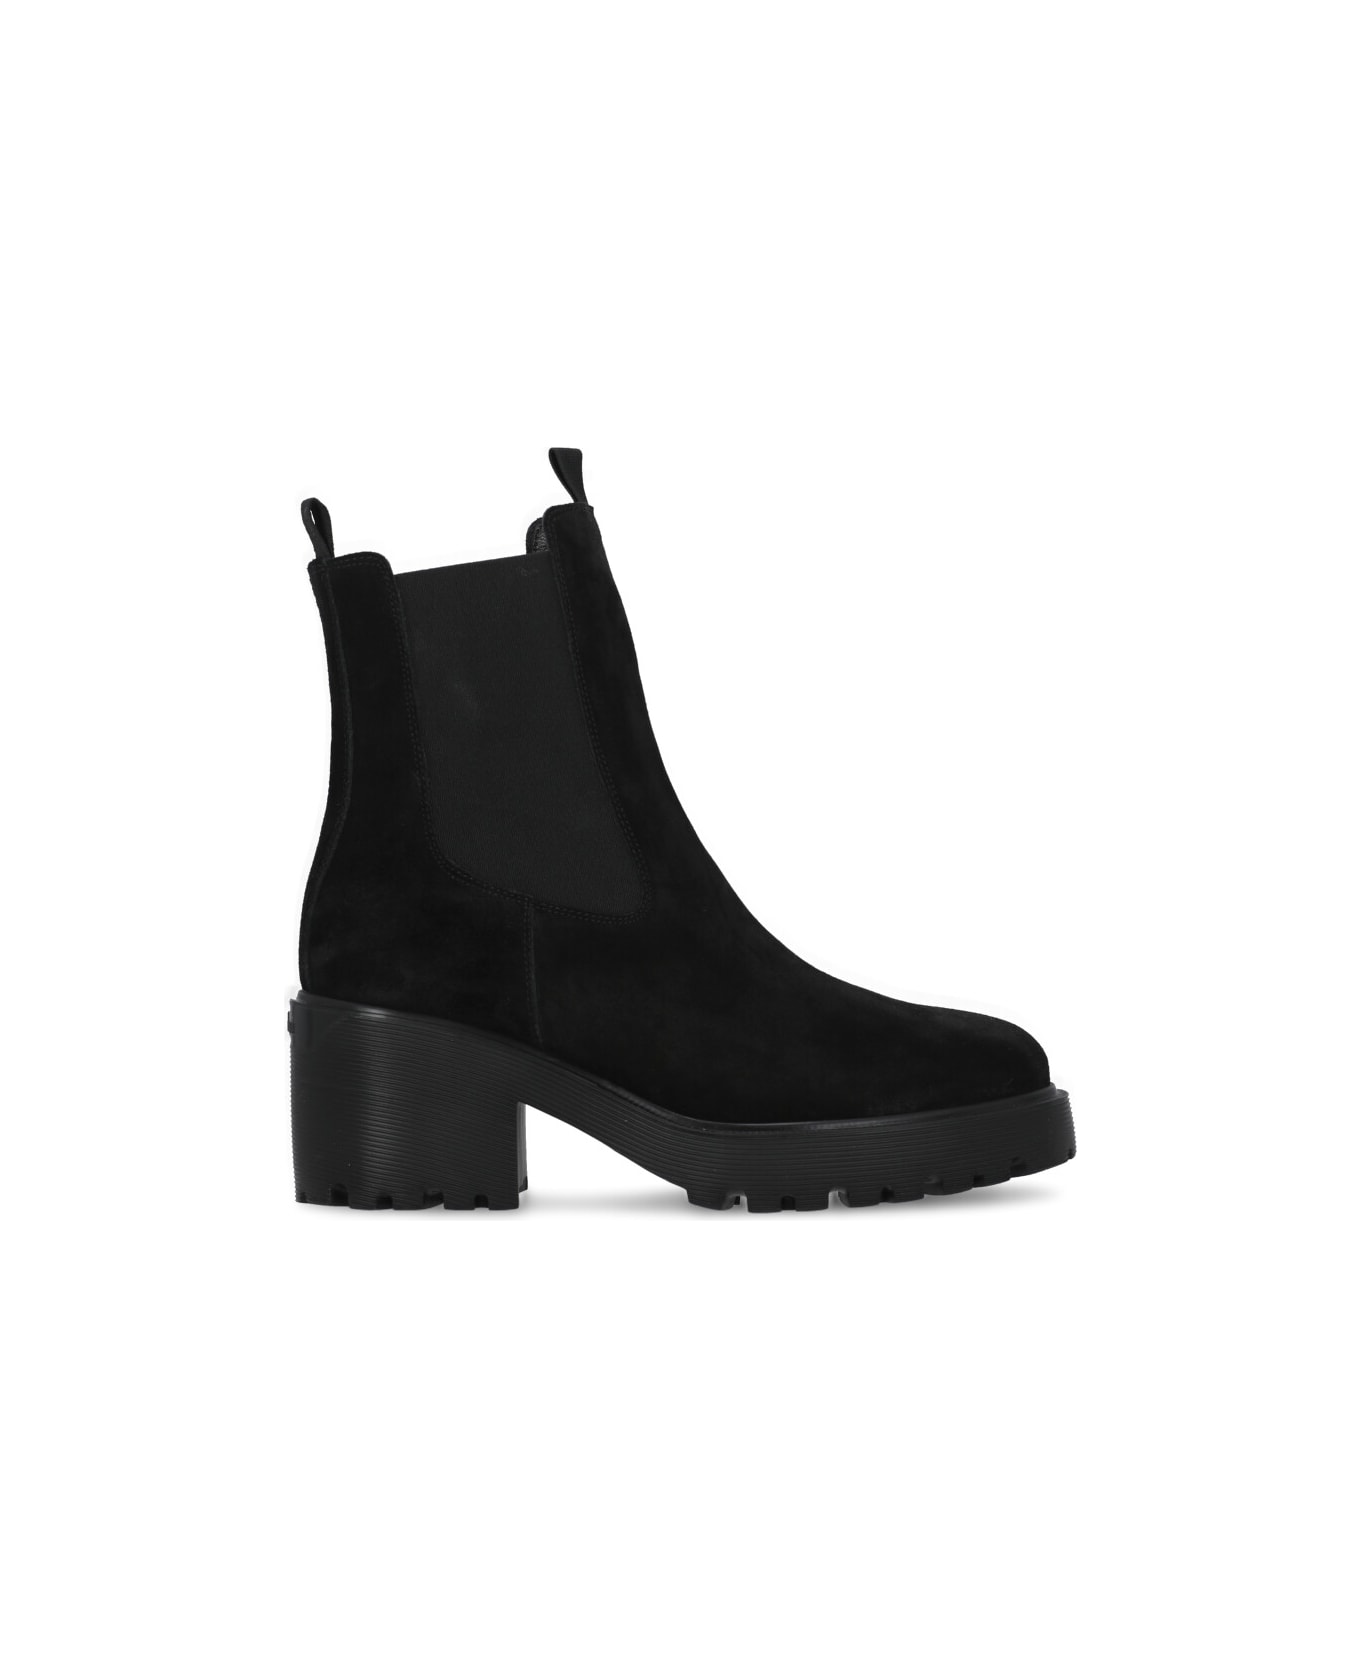 Hogan H649 Chelsea Boots - Black